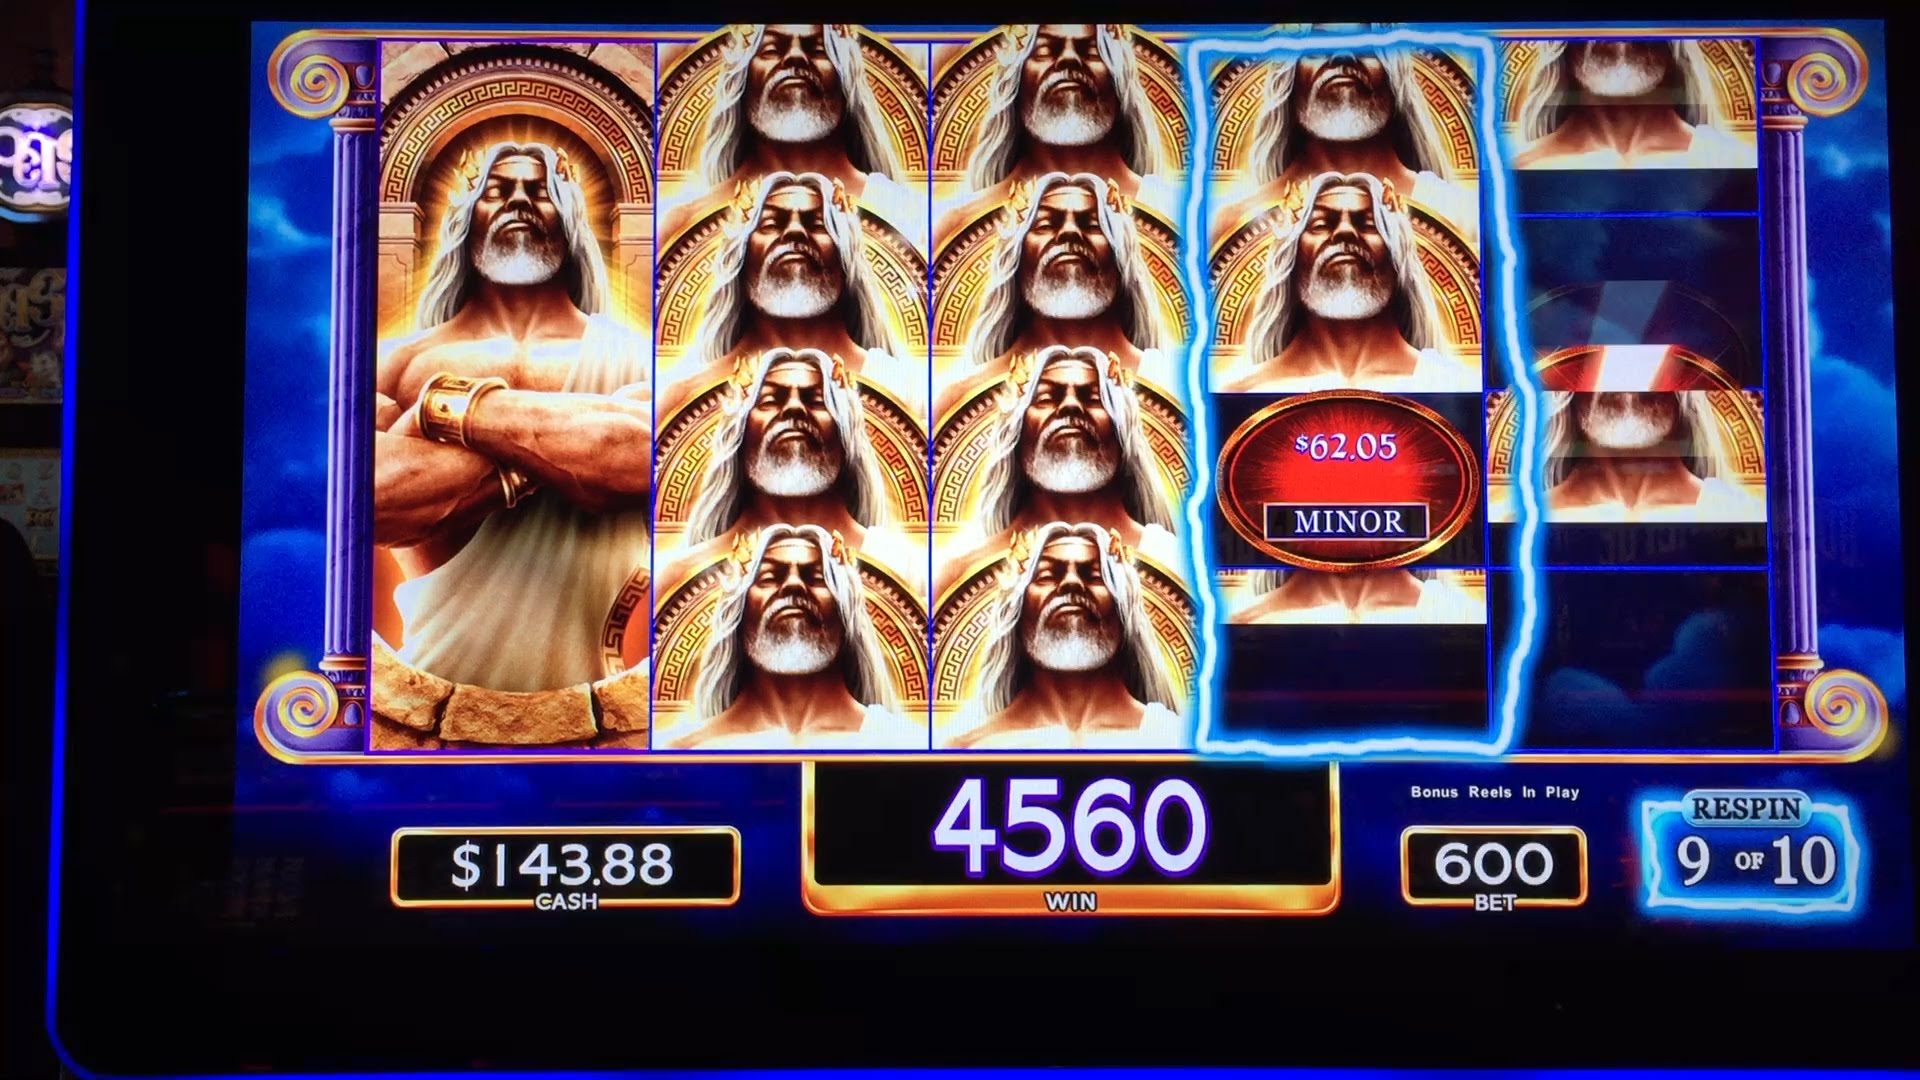 Zeus Slot Machine Free Download